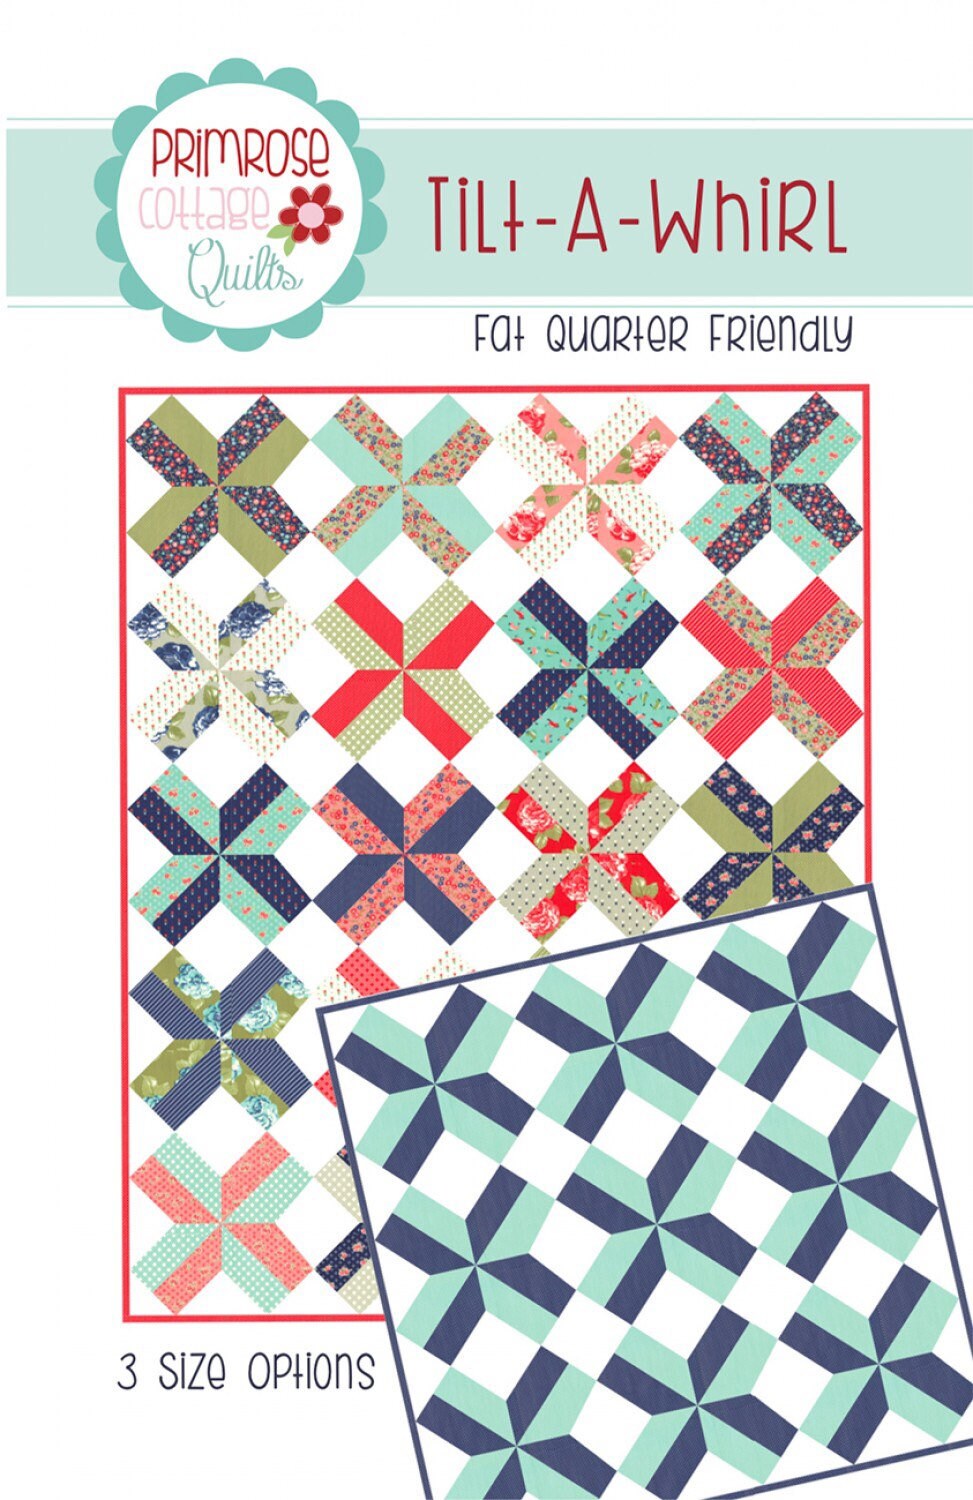 Tiler A Whirl Quilt Pattern - Primrose Cottage Quilts - Fat Quarter Friendly - 3 sizes